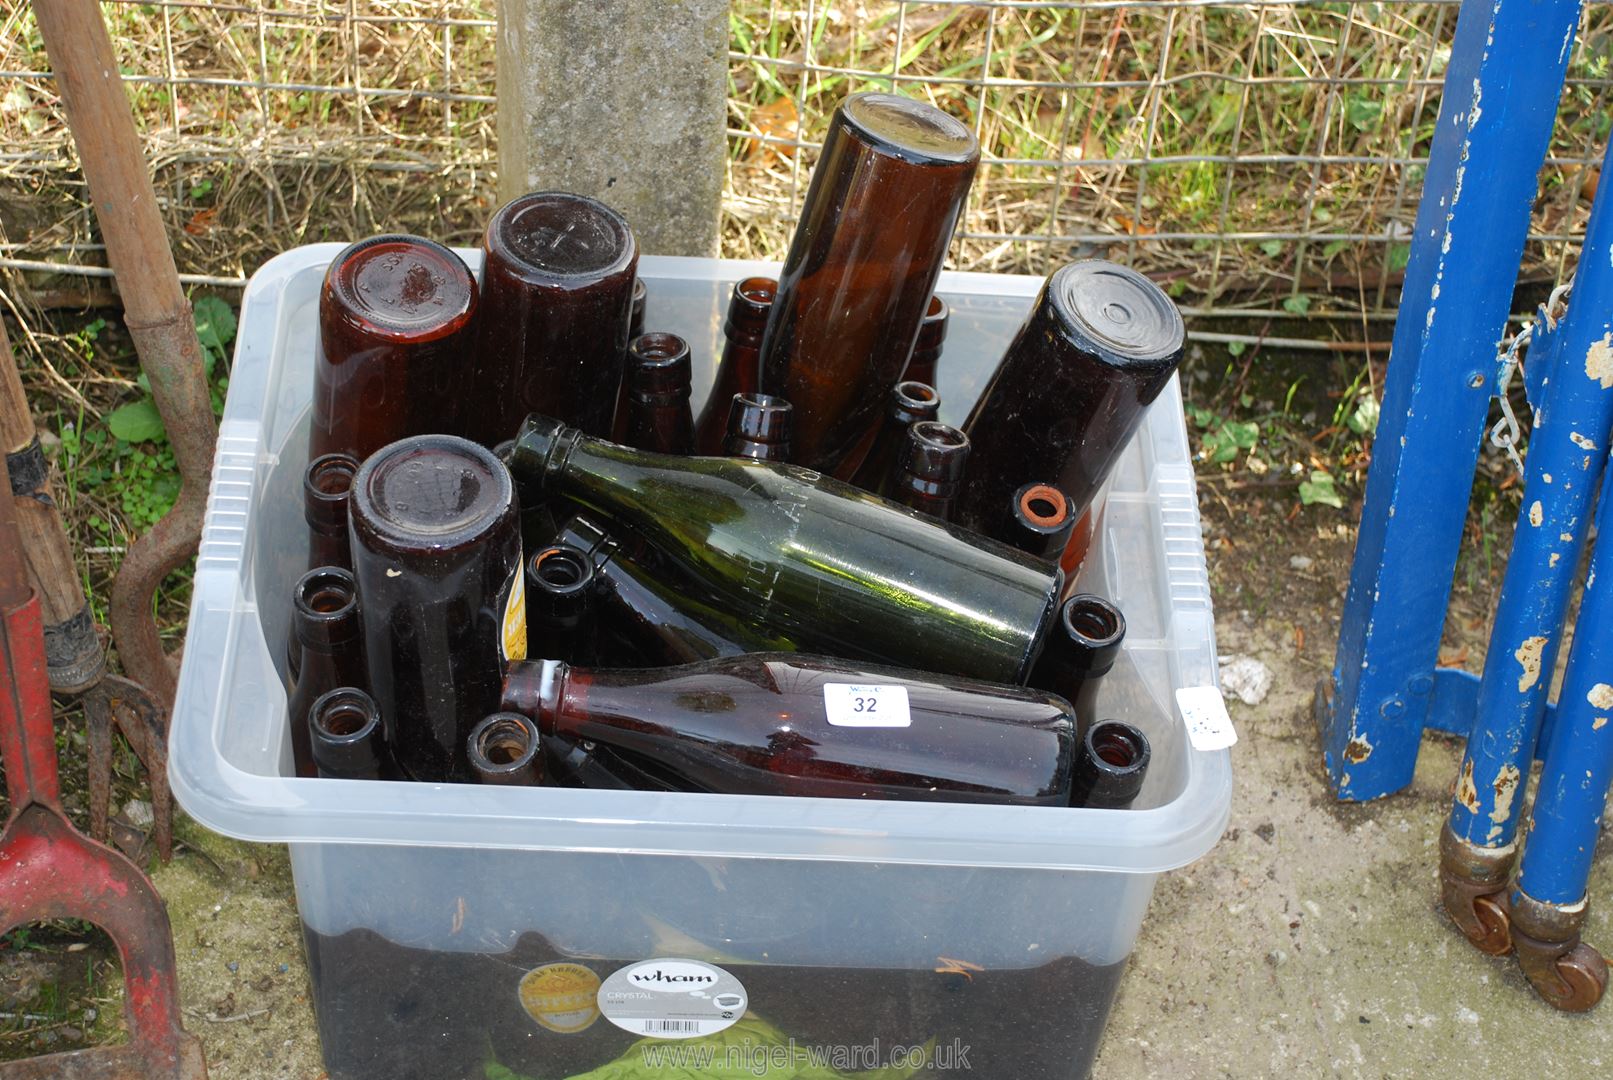 Quantity of old beer bottles etc.